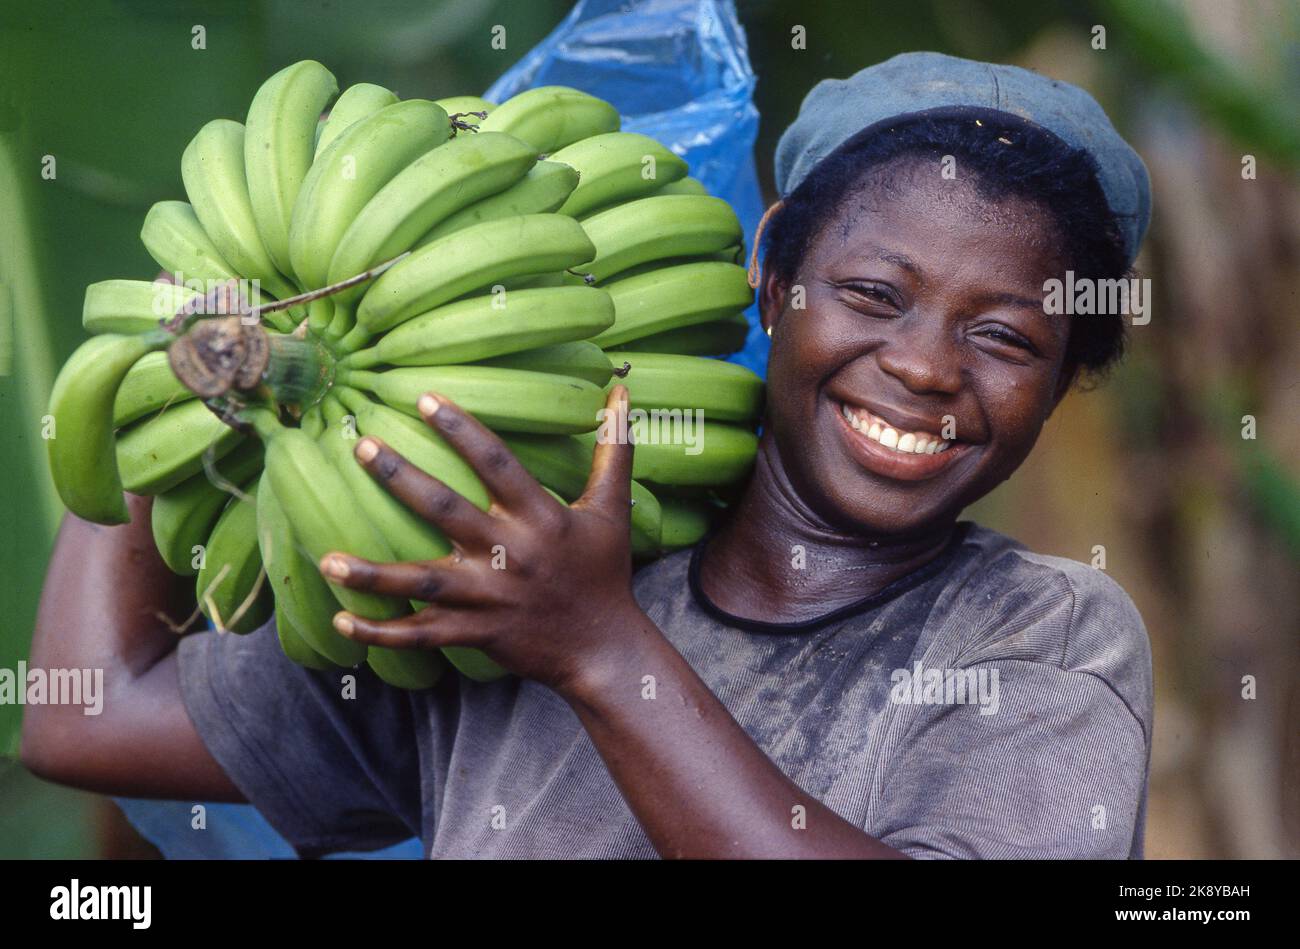 https://c8.alamy.com/comp/2K8YBAH/ghana-volta-region-woman-has-just-harvested-a-bunch-of-bananas-on-the-fair-trade-plantation-of-oke-bananas-these-bananas-will-be-exported-to-eu-2K8YBAH.jpg